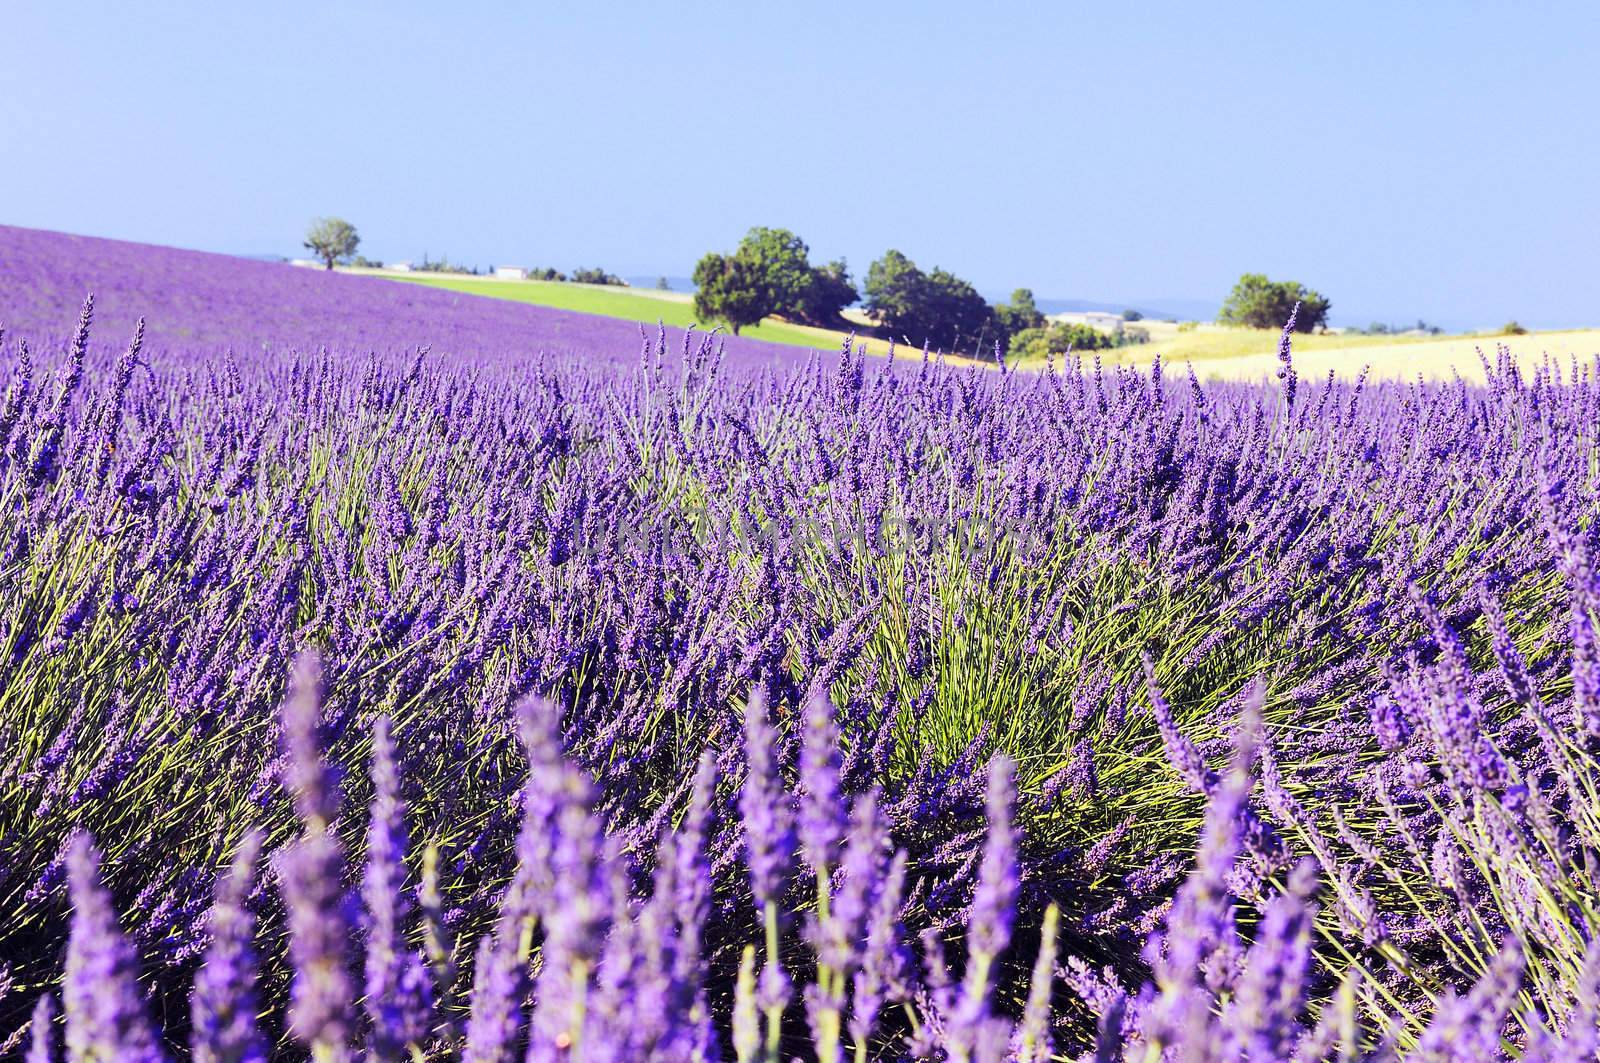 Lavender in the landscape by ventdusud